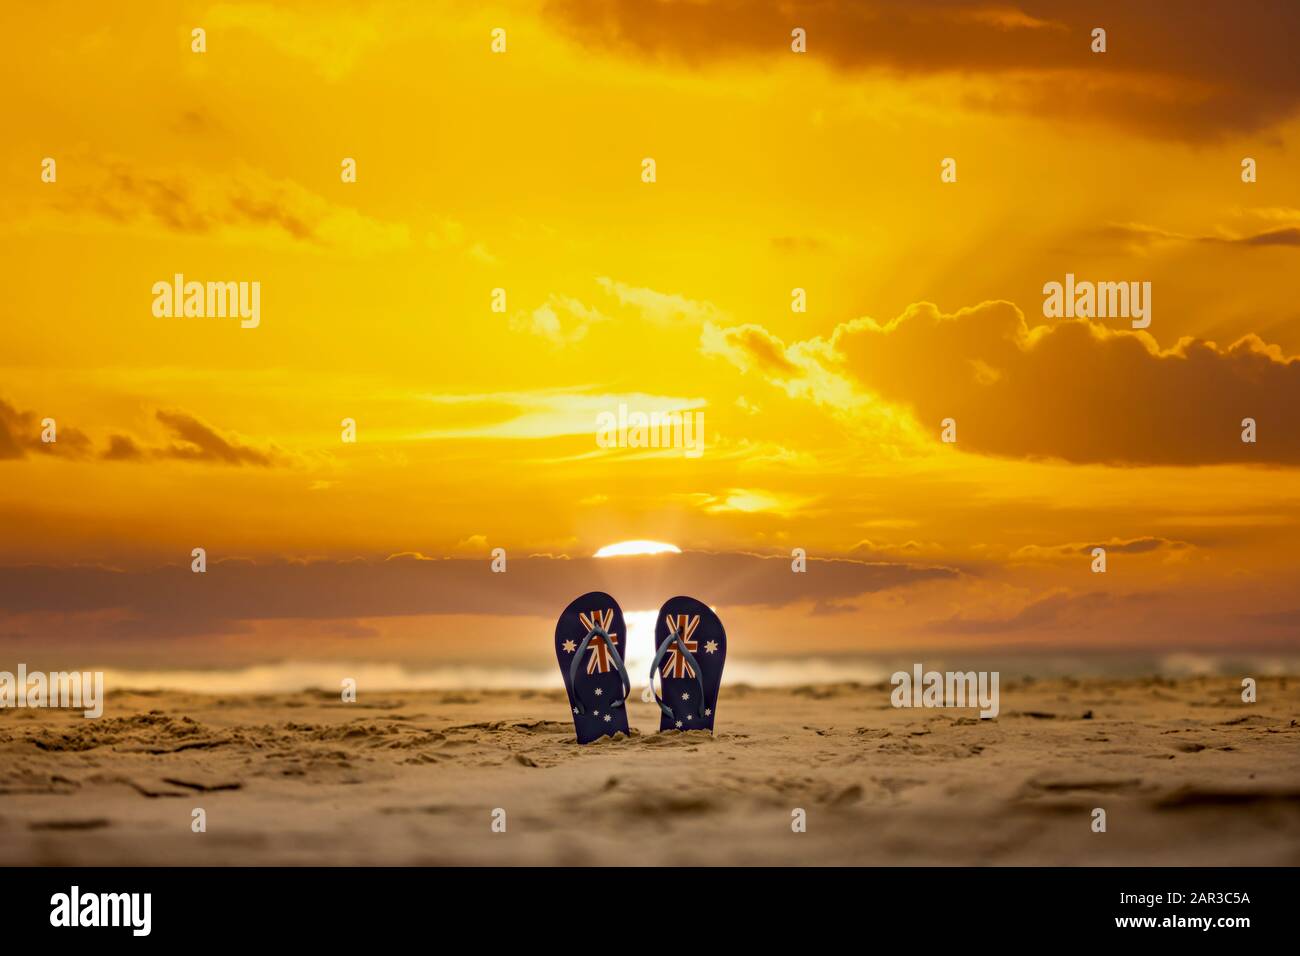 Tangas australiano que se pegan en arena con un espectacular fondo del amanecer. Concepto de día de Australia Foto de stock